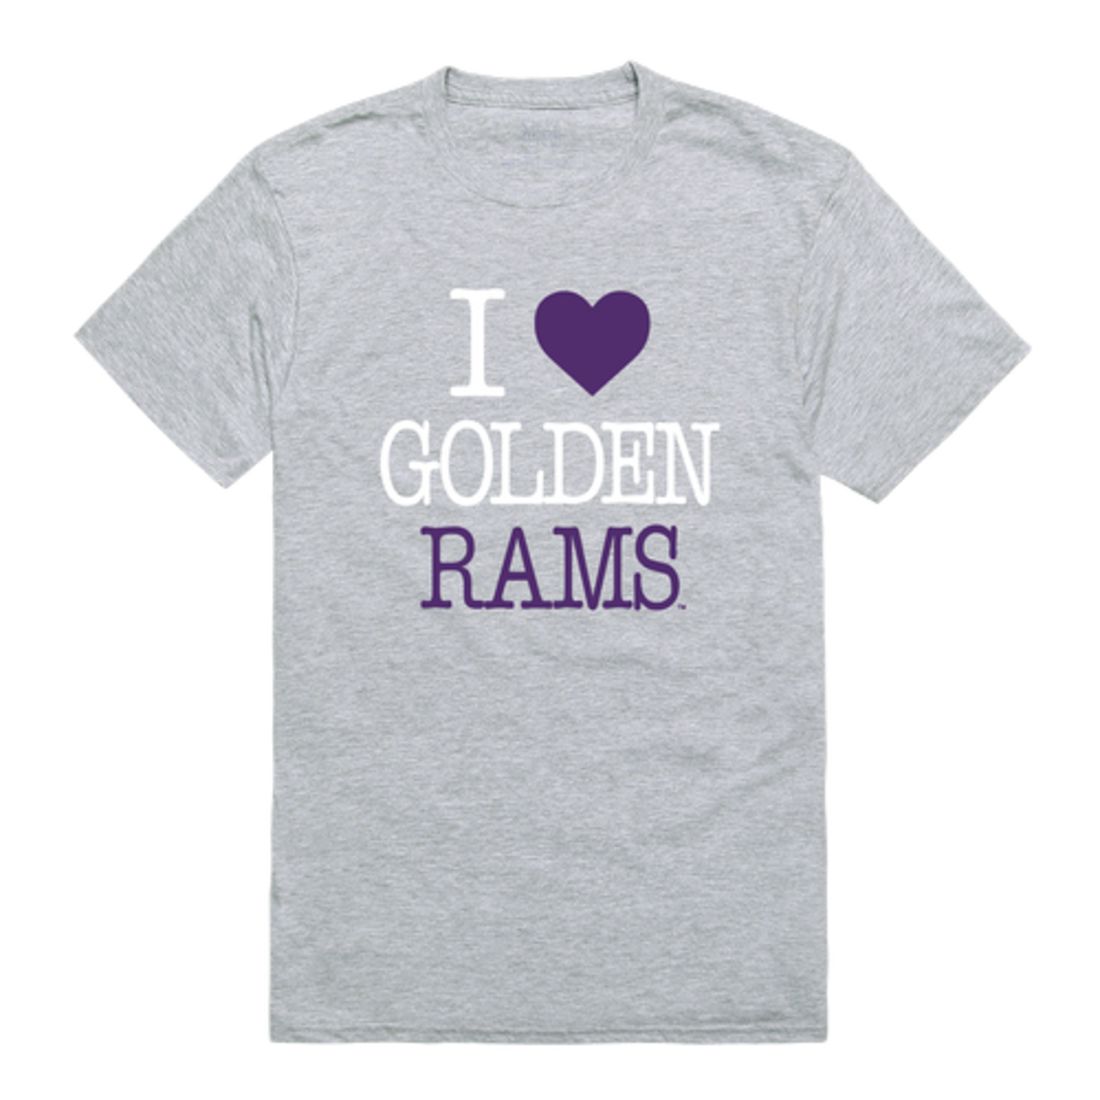 I Love West Chester University Rams T-Shirt Tee